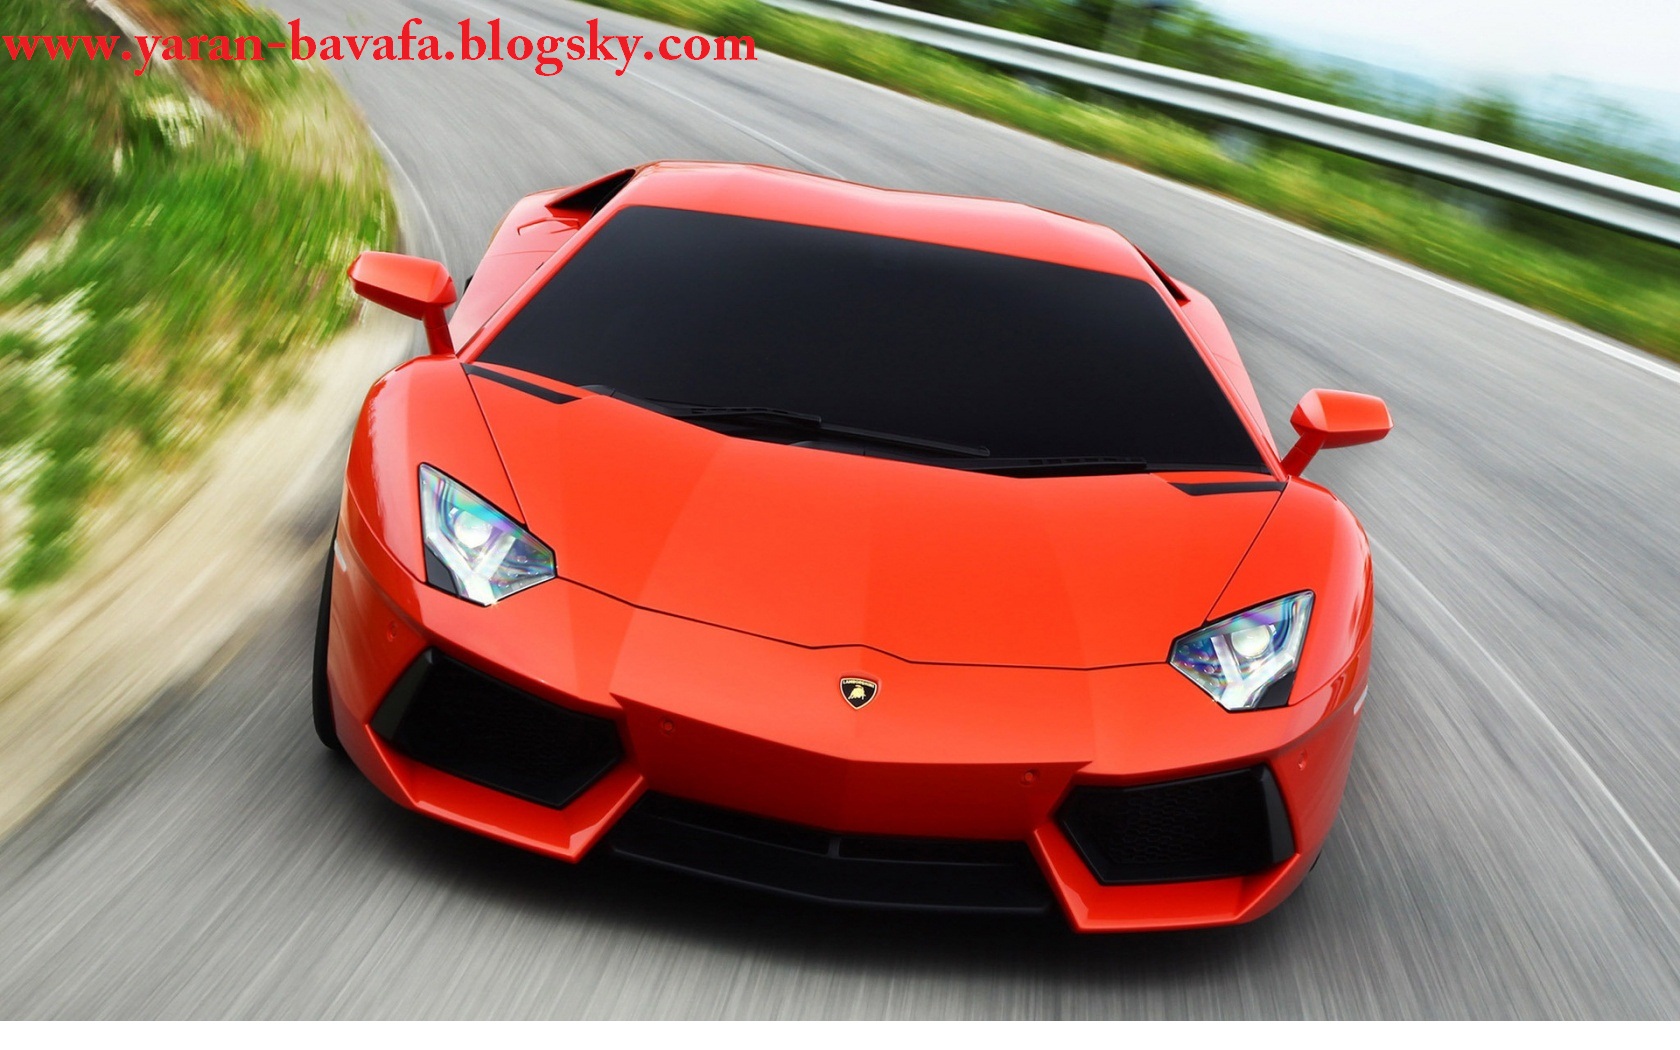 http://s3.picofile.com/file/7409471284/Lamborghini_Aventador_9706434681.jpg